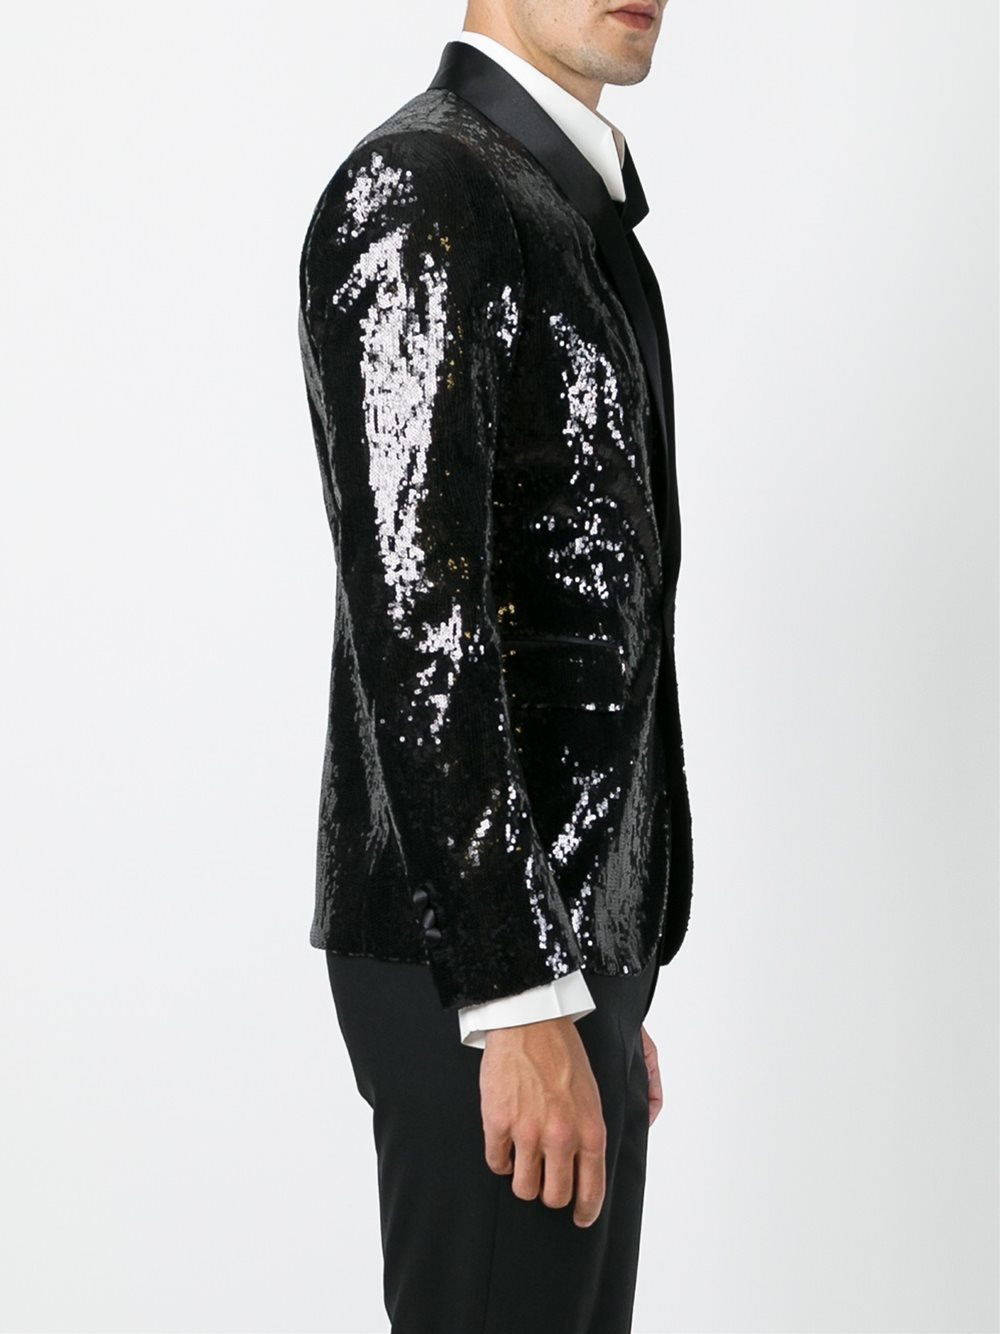 Lyst - DSquared² Sequined Suit Jacket in Black for Men